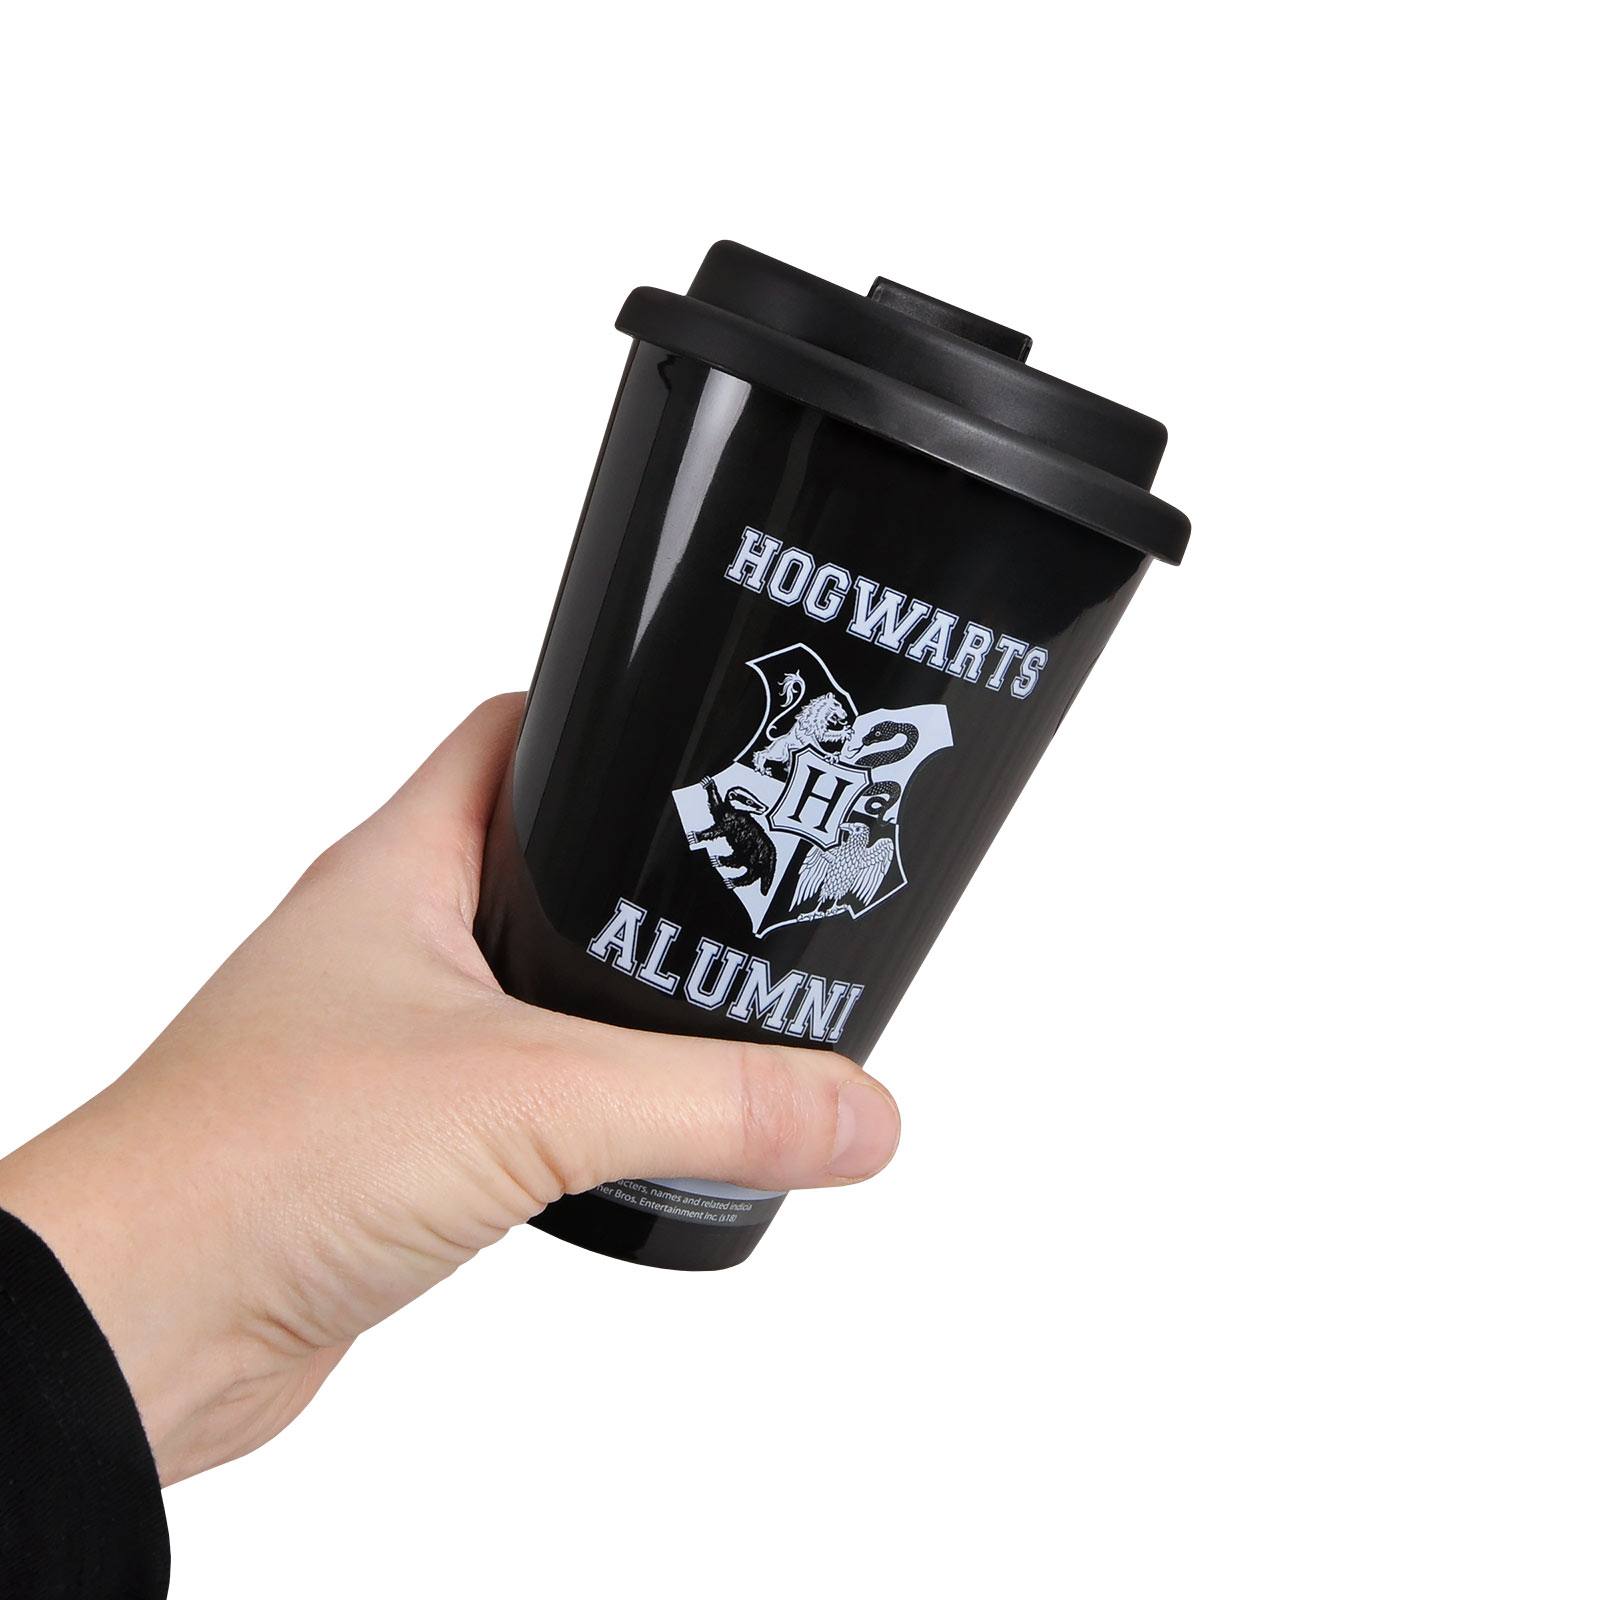 Harry Potter - Hogwarts Alumni To Go Cup